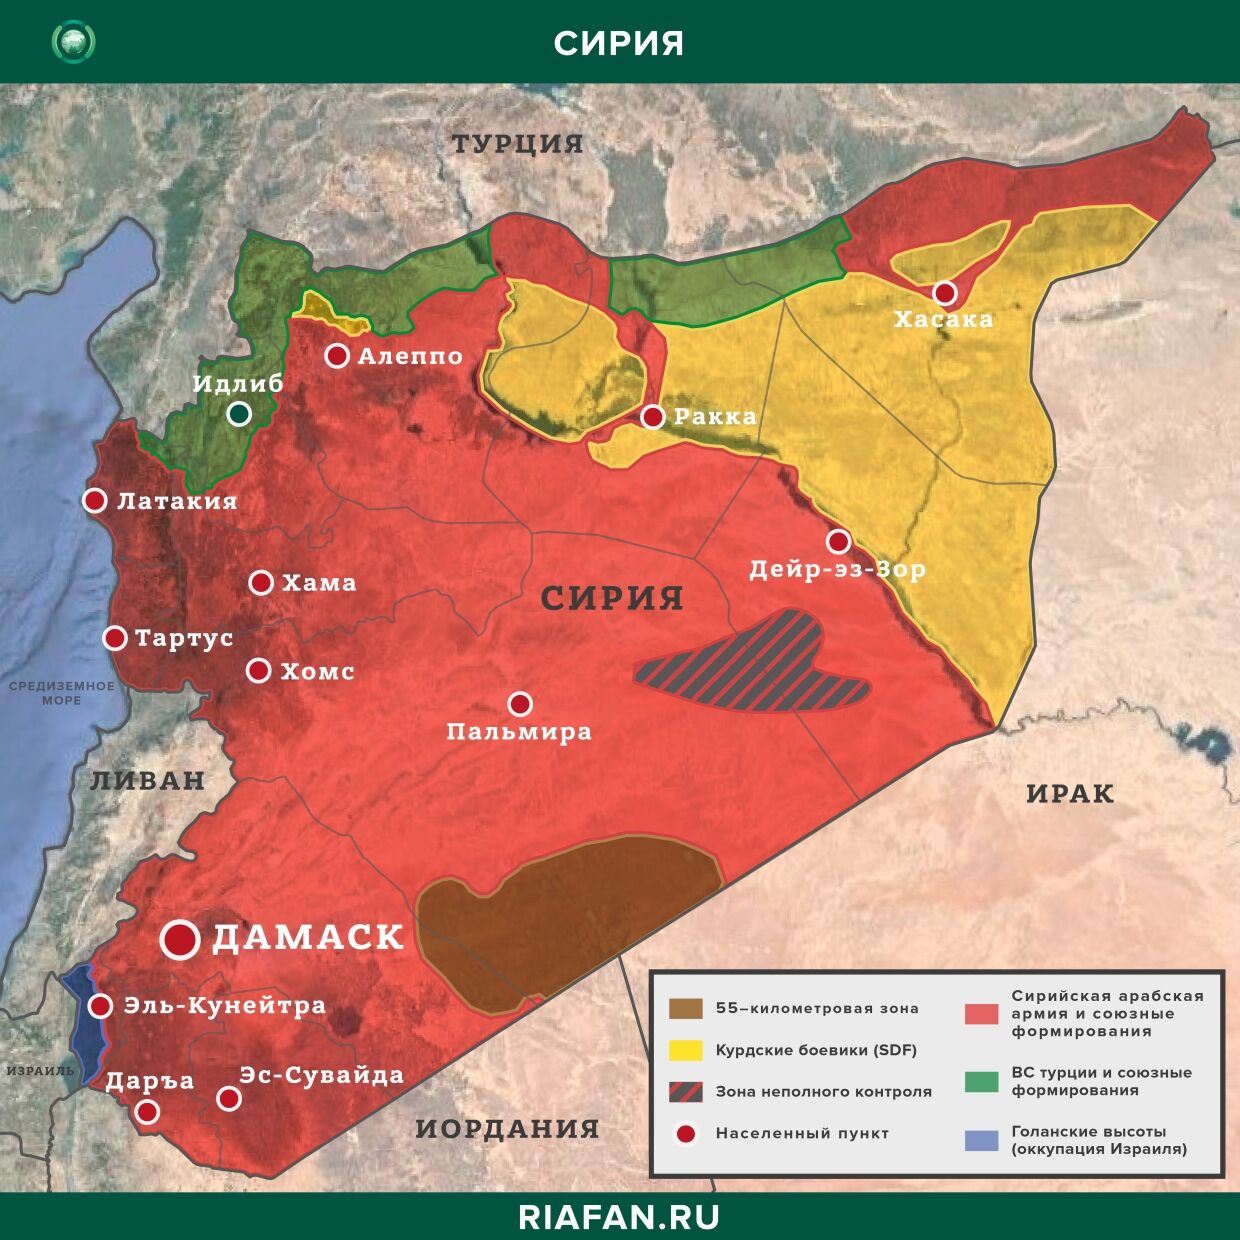 叙利亚每日结果 27 可能 06.00: в Сирии отменен комендантский час, протурецкие силы вербуют боевиков в ряды ПНС